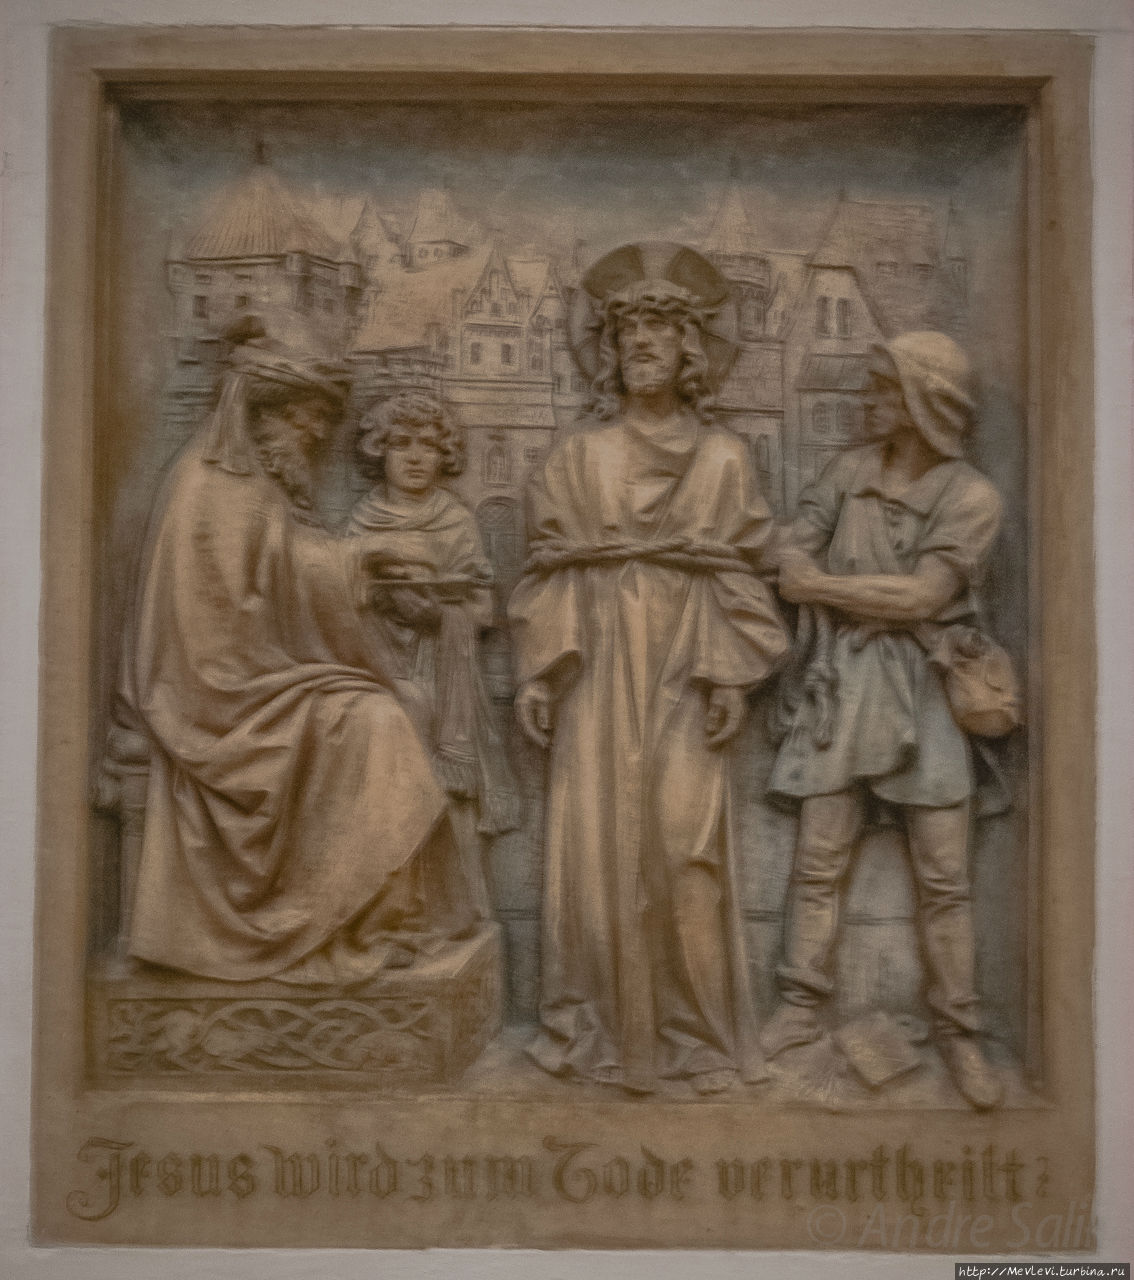 Фрауэнкирхе (нем. Frauenkirche) Мюнхен, Германия